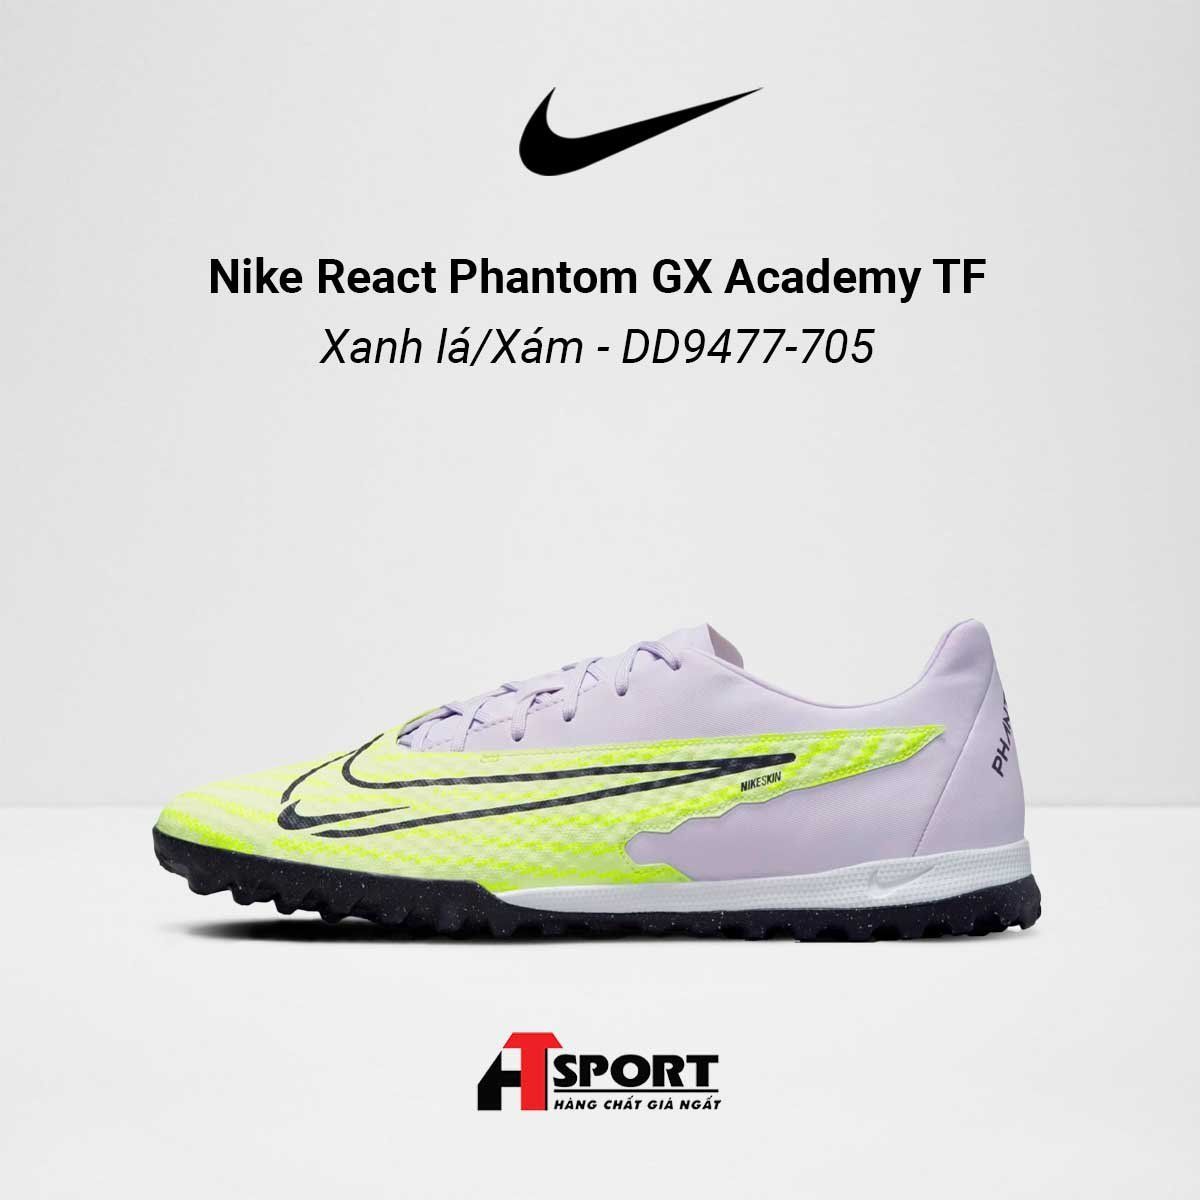  Nike React Phantom GX Xanh Lá/Xám Academy TF - DD9477-705 